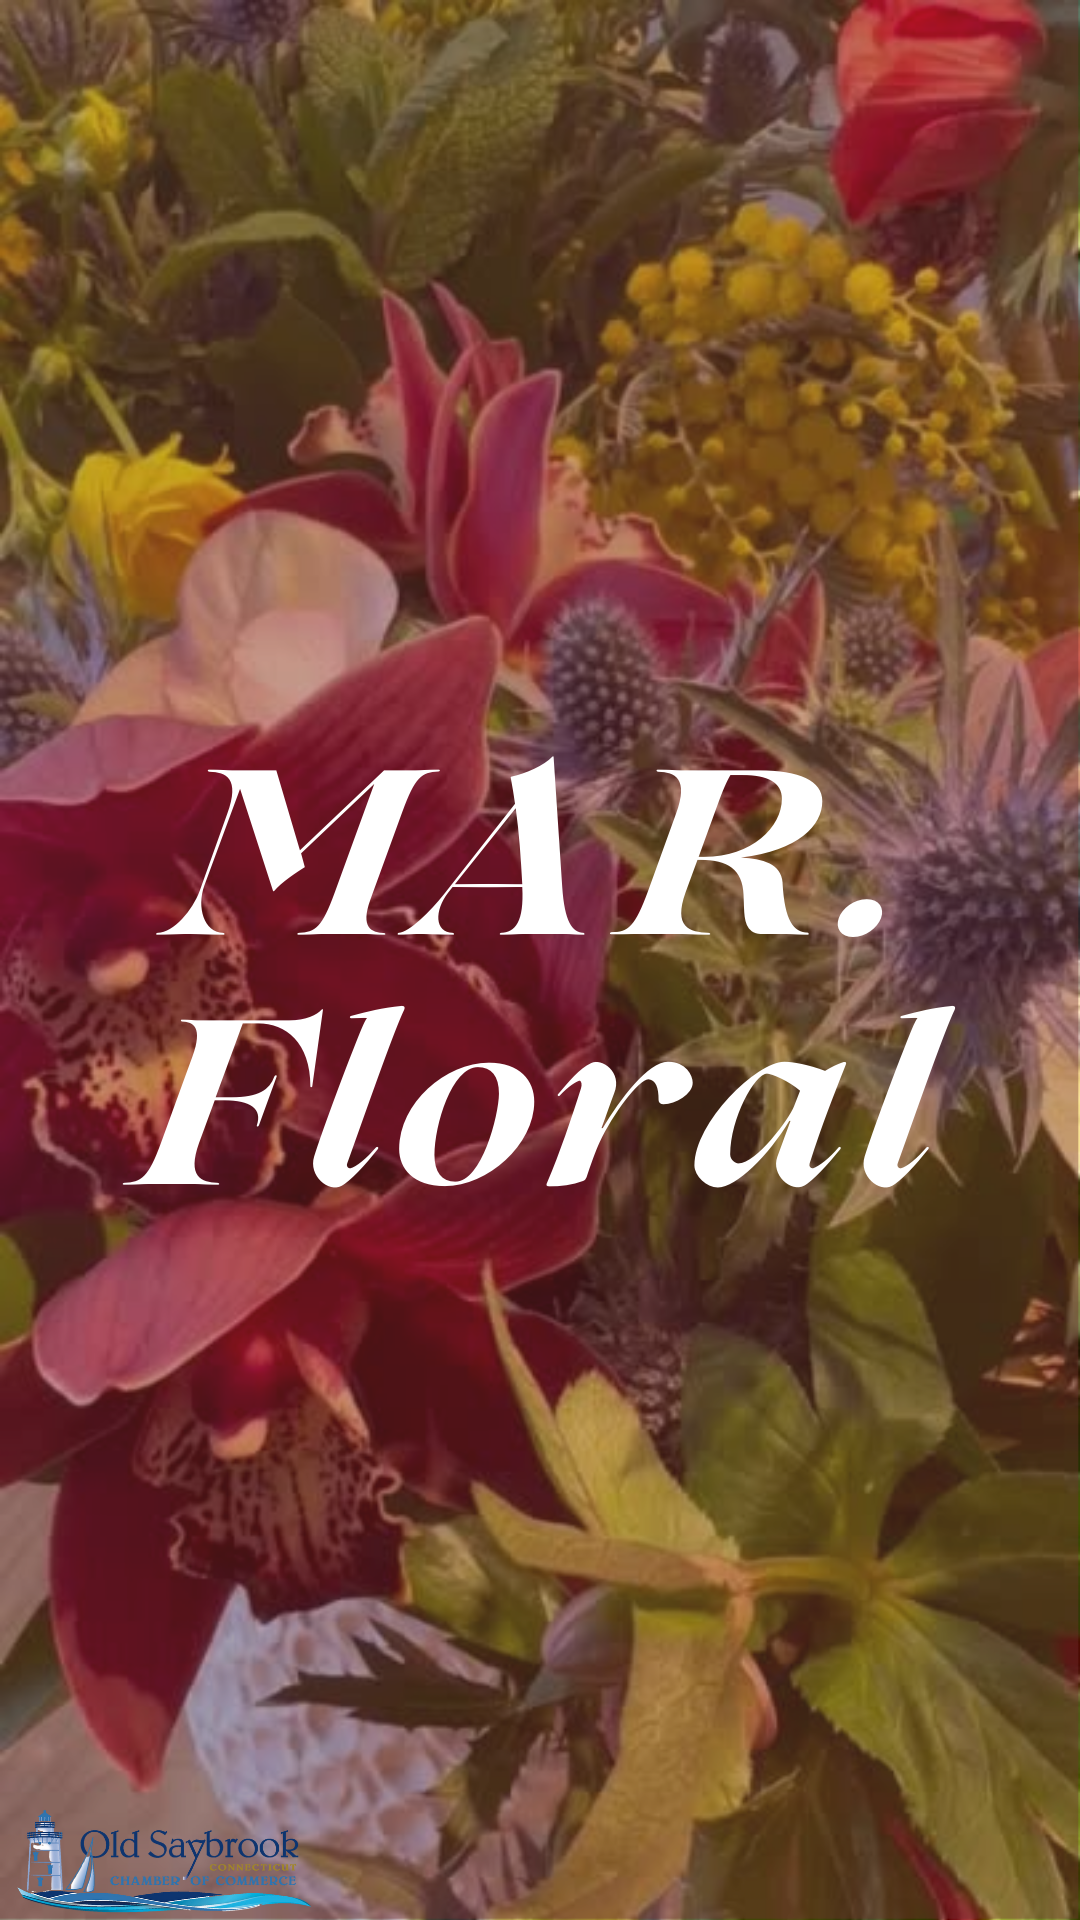 Image for Member Monday: MAR. Floral